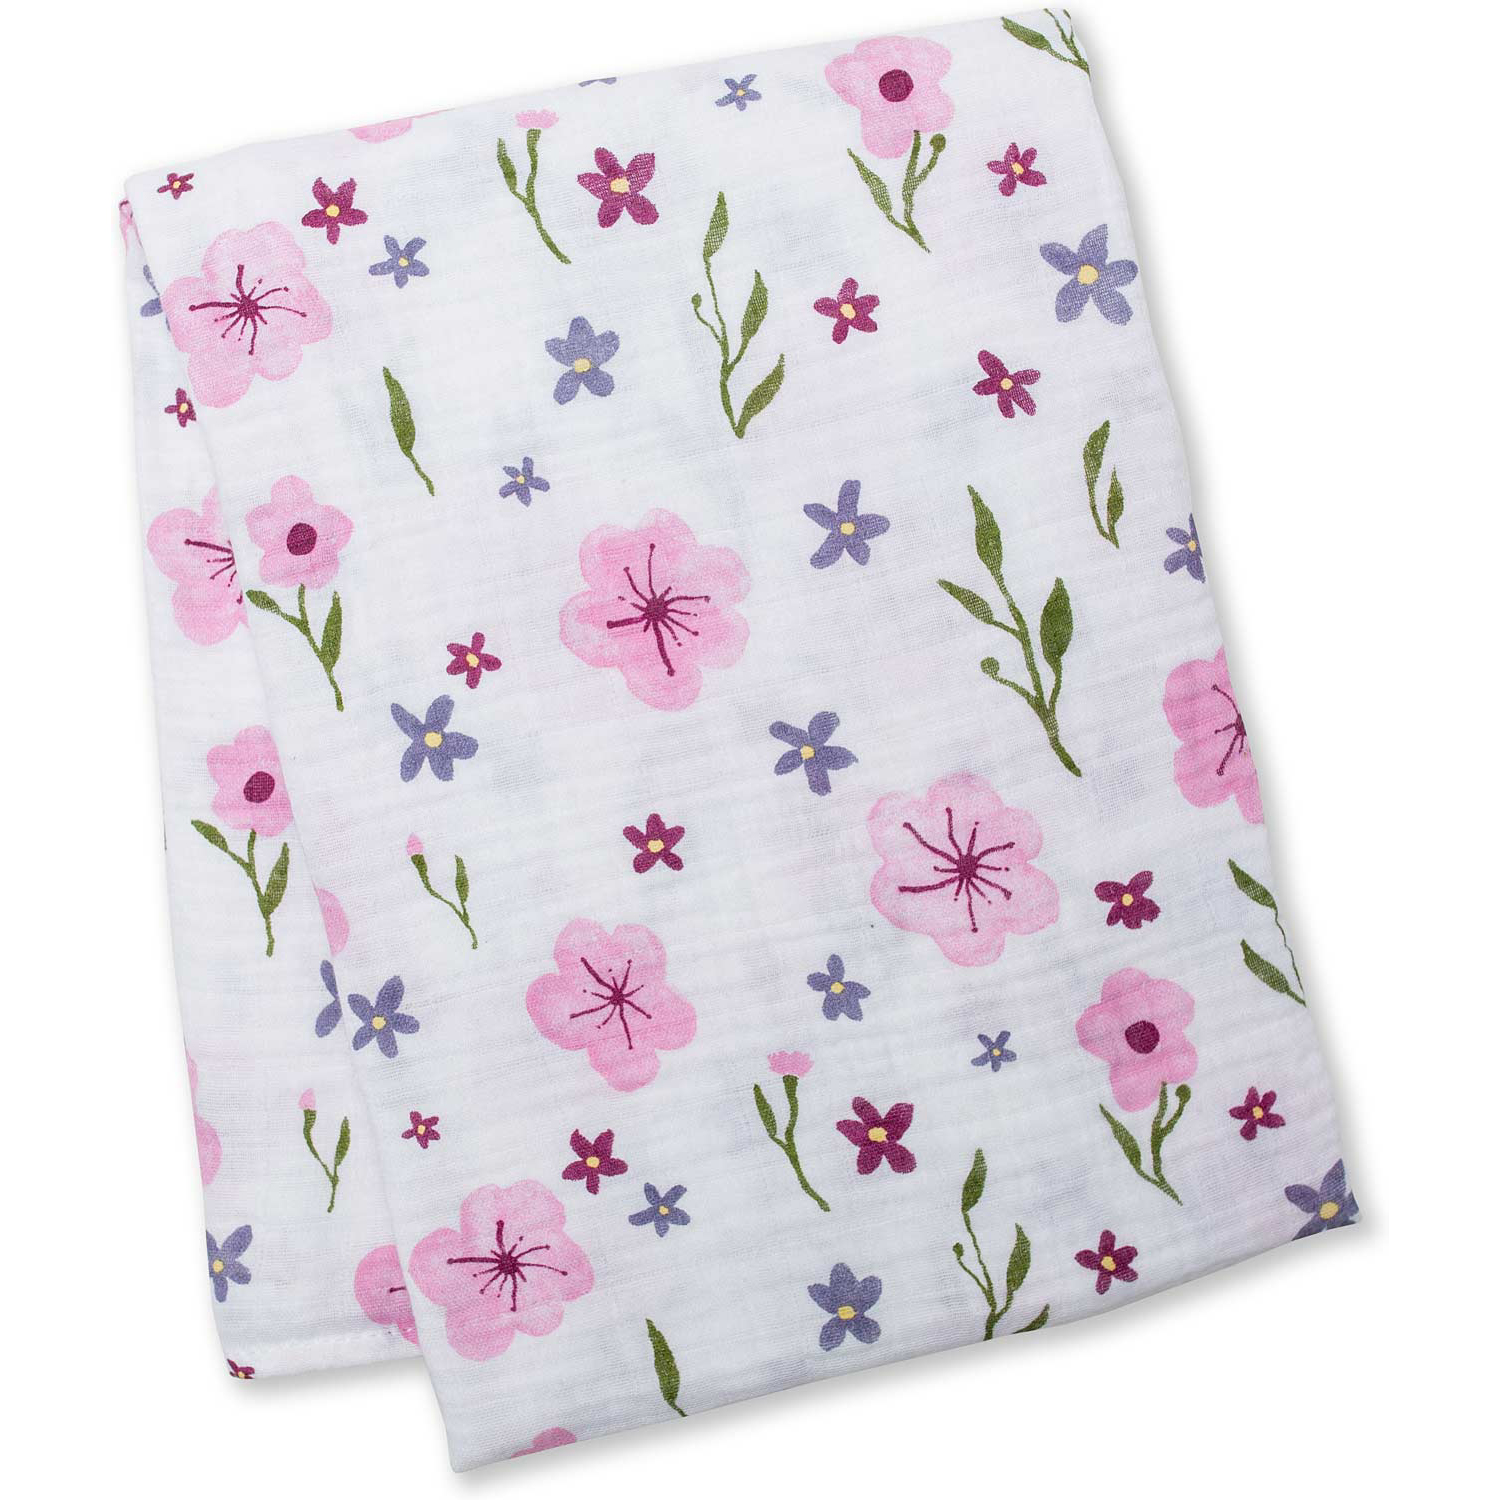 Lovely Floral muslin swaddling blanket 1